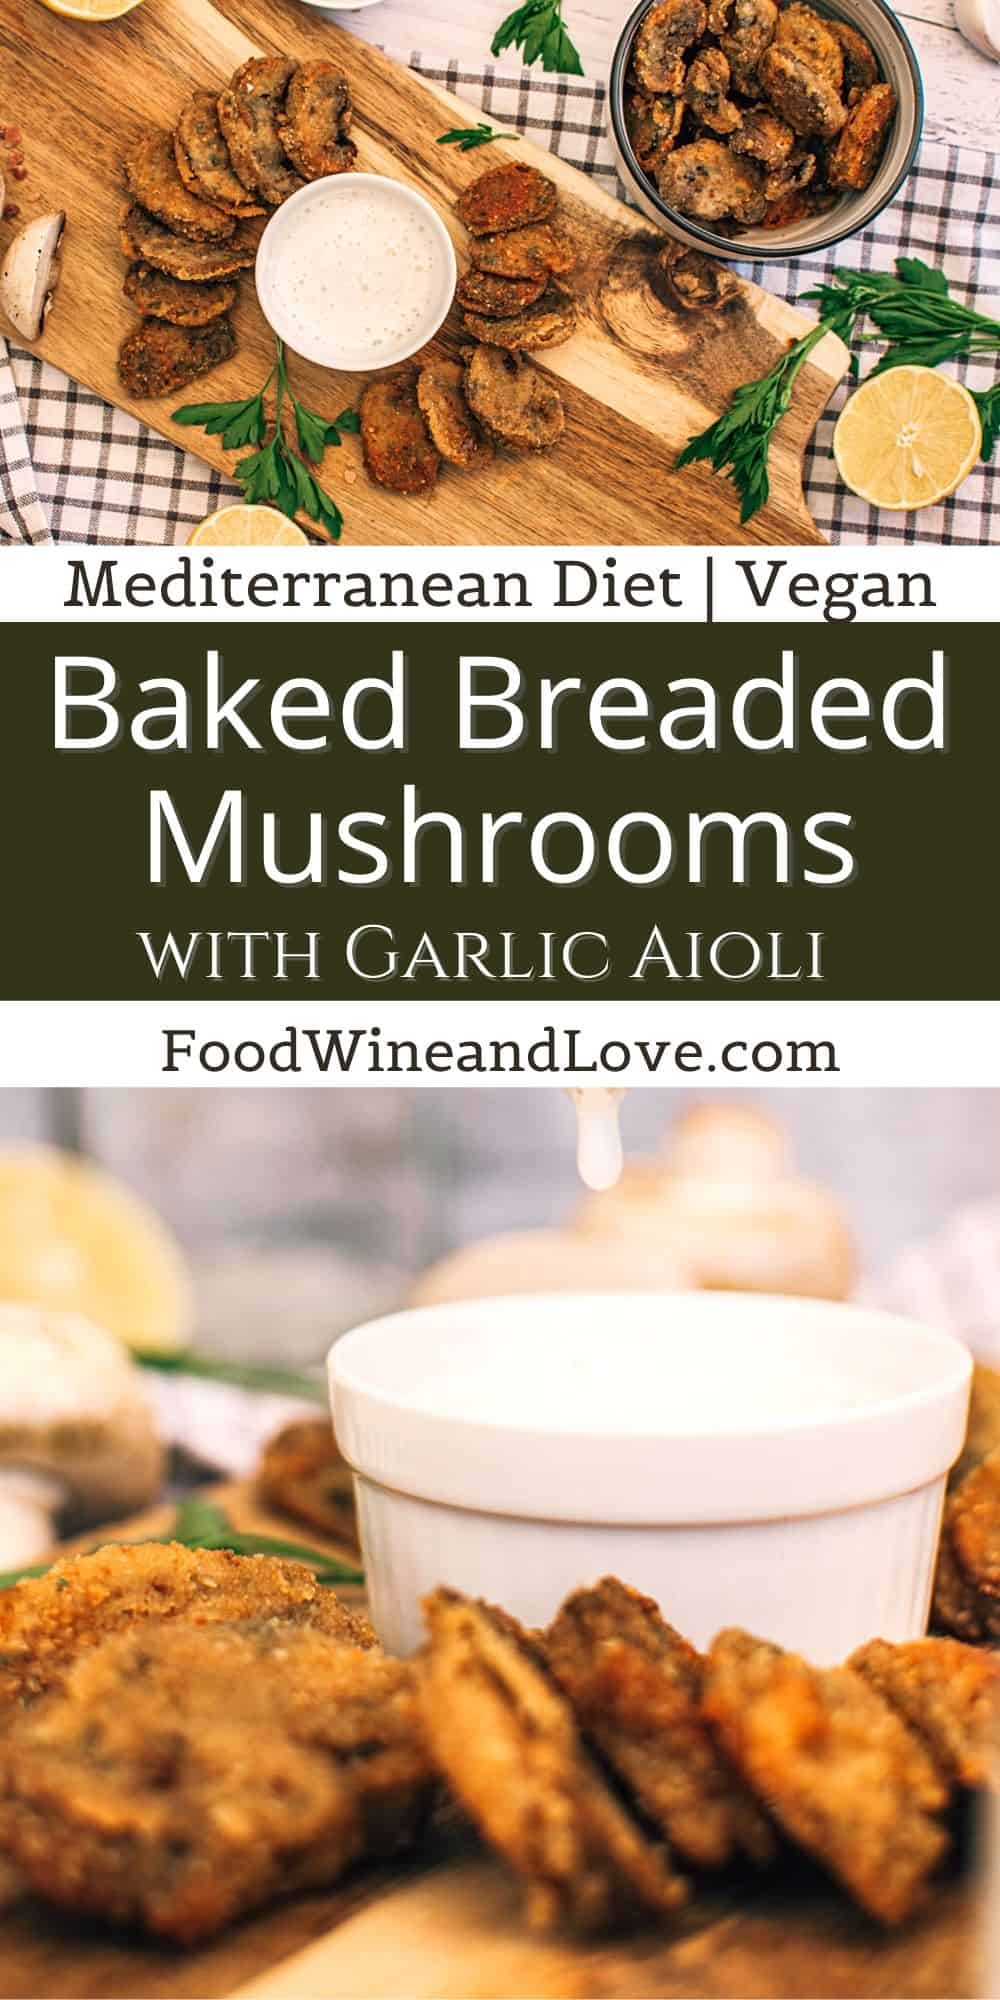 Baked Breaded Mushrooms with Garlic Aioli  